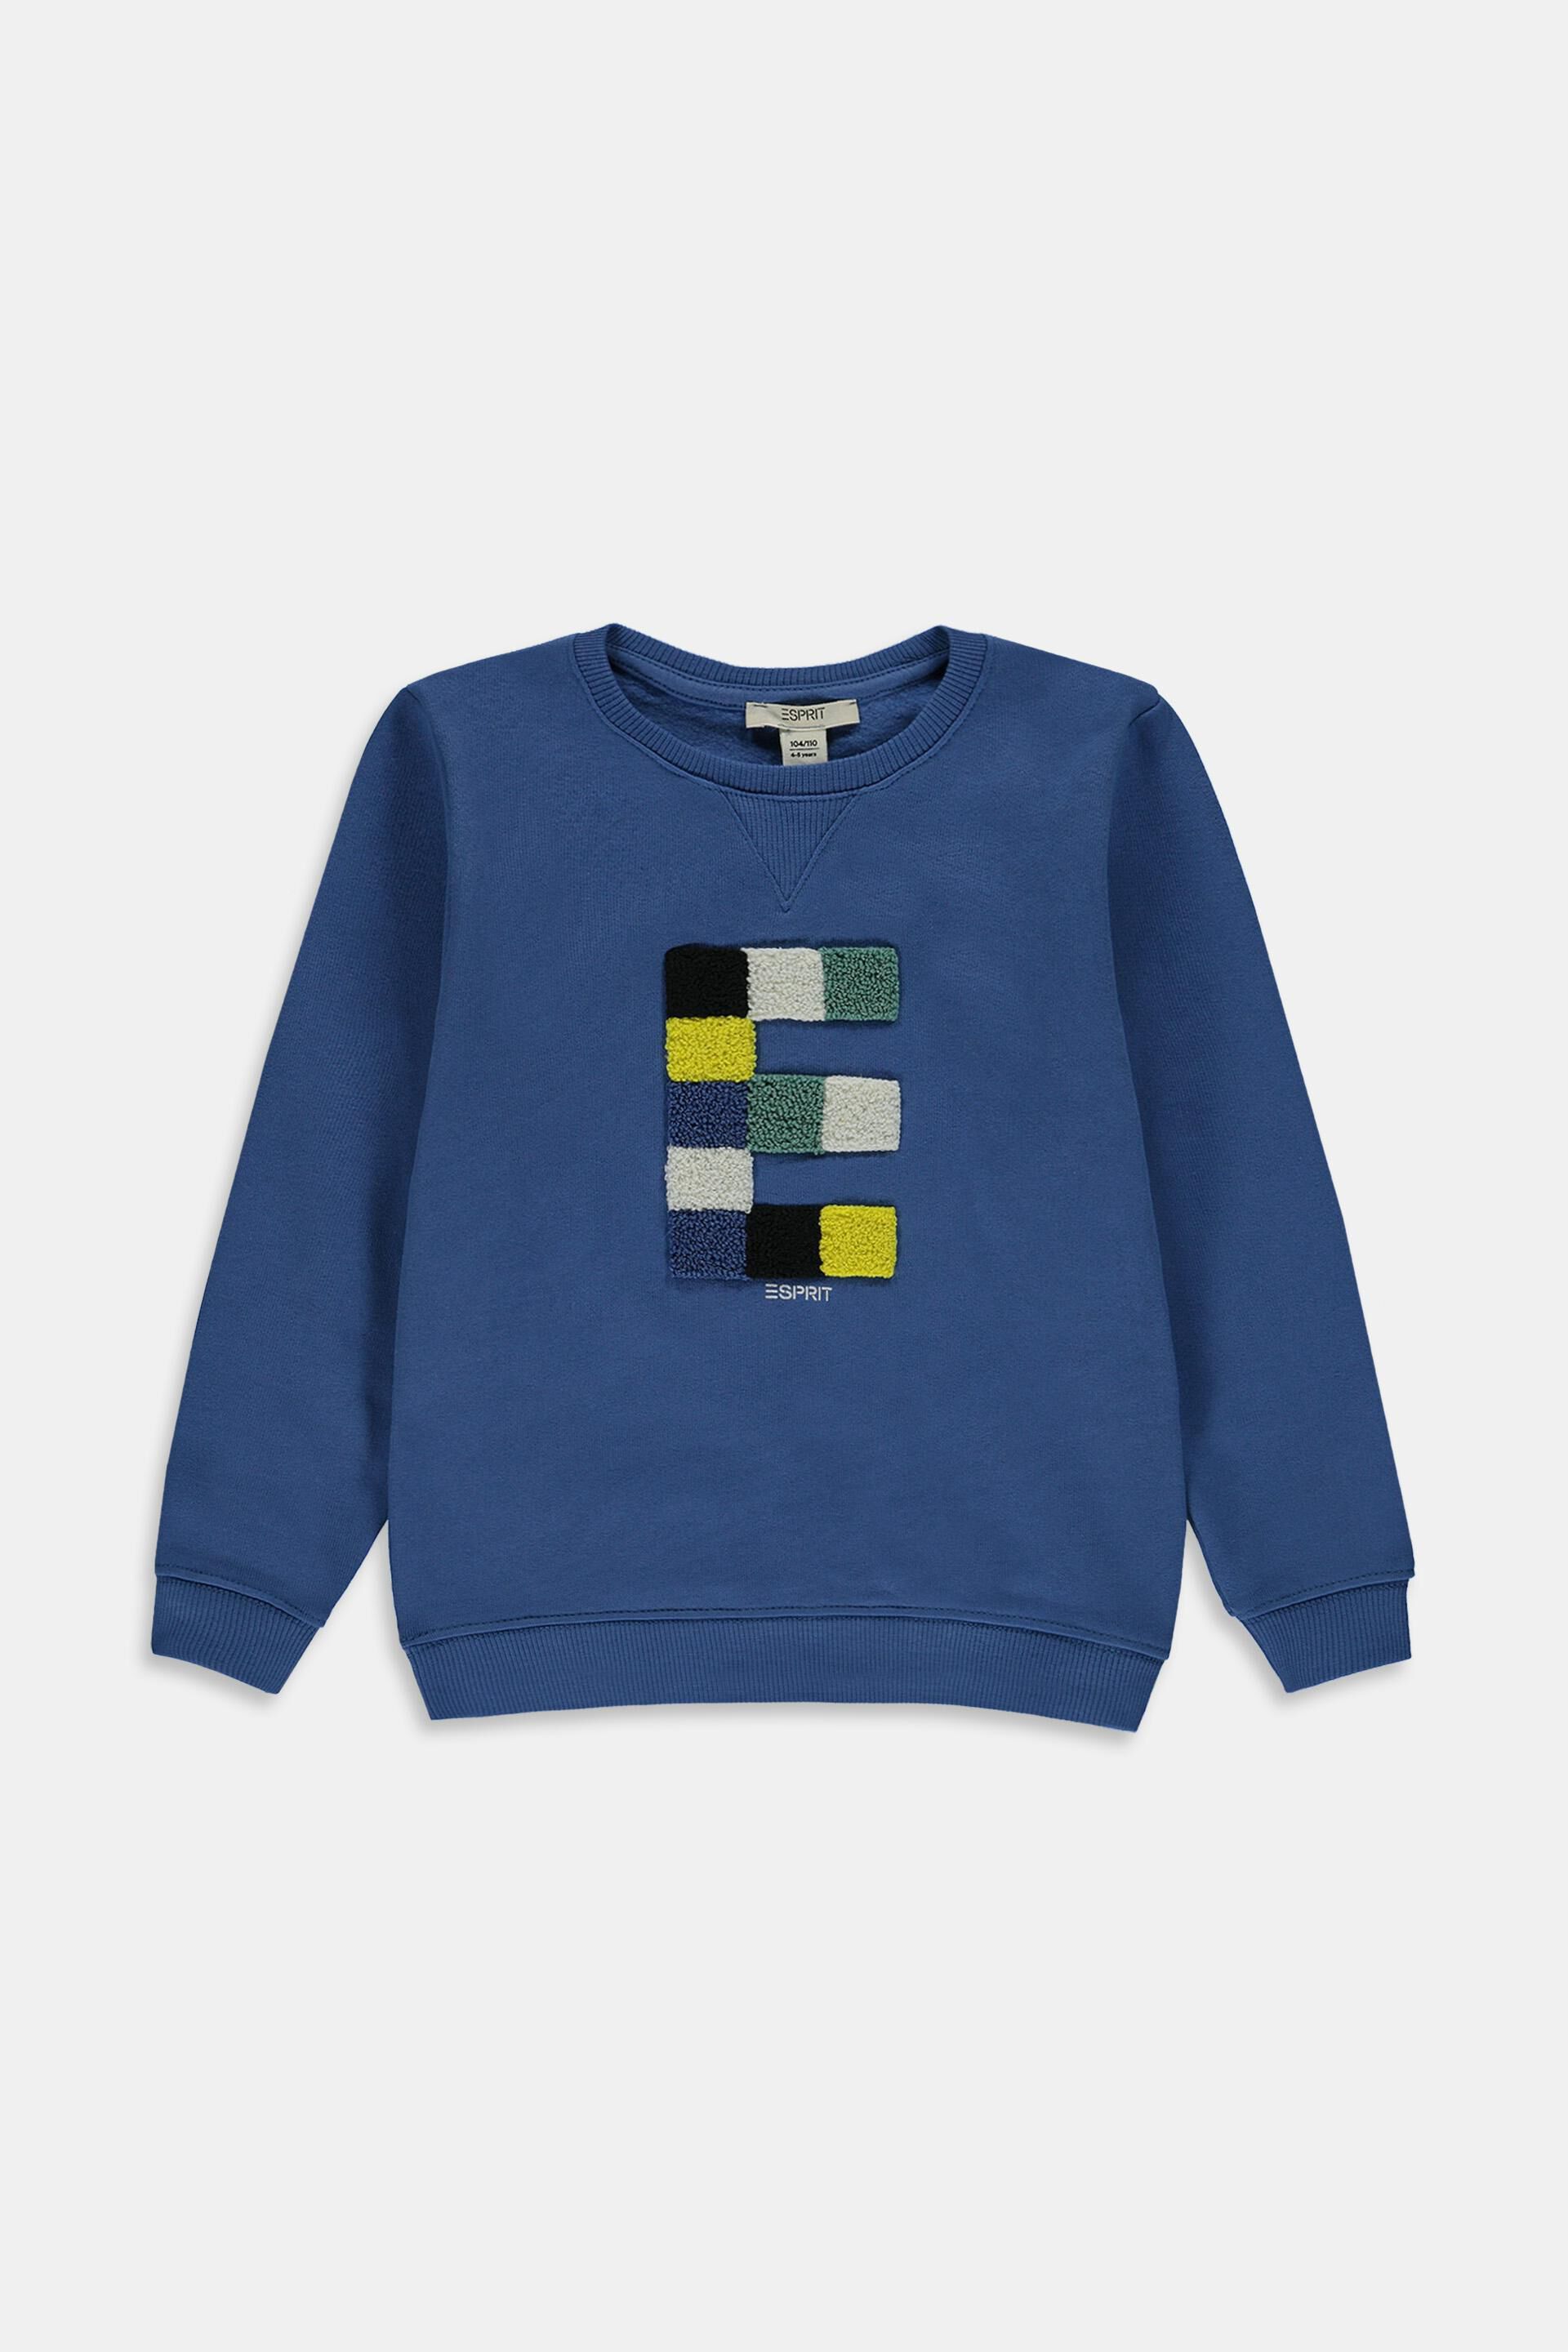 KINDER Pullovers & Sweatshirts Casual Esprit sweatshirt Blau 14Y Rabatt 72 % 